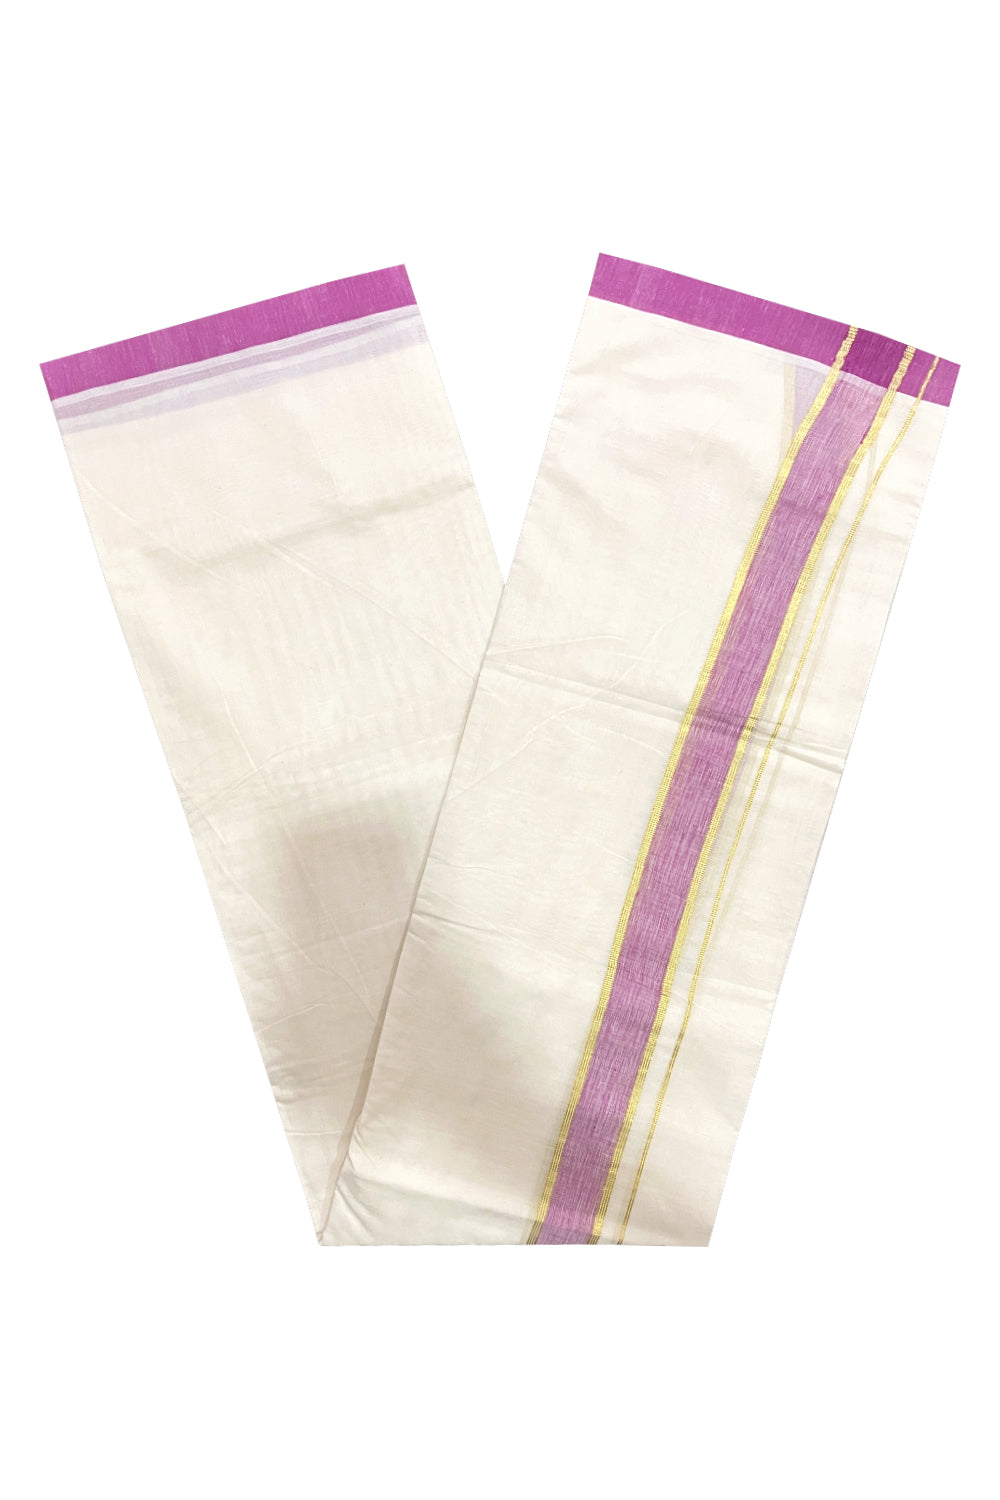 Cotton Double Mundu with Magenta and Kasavu Kara (South Indian Kerala Dhoti)